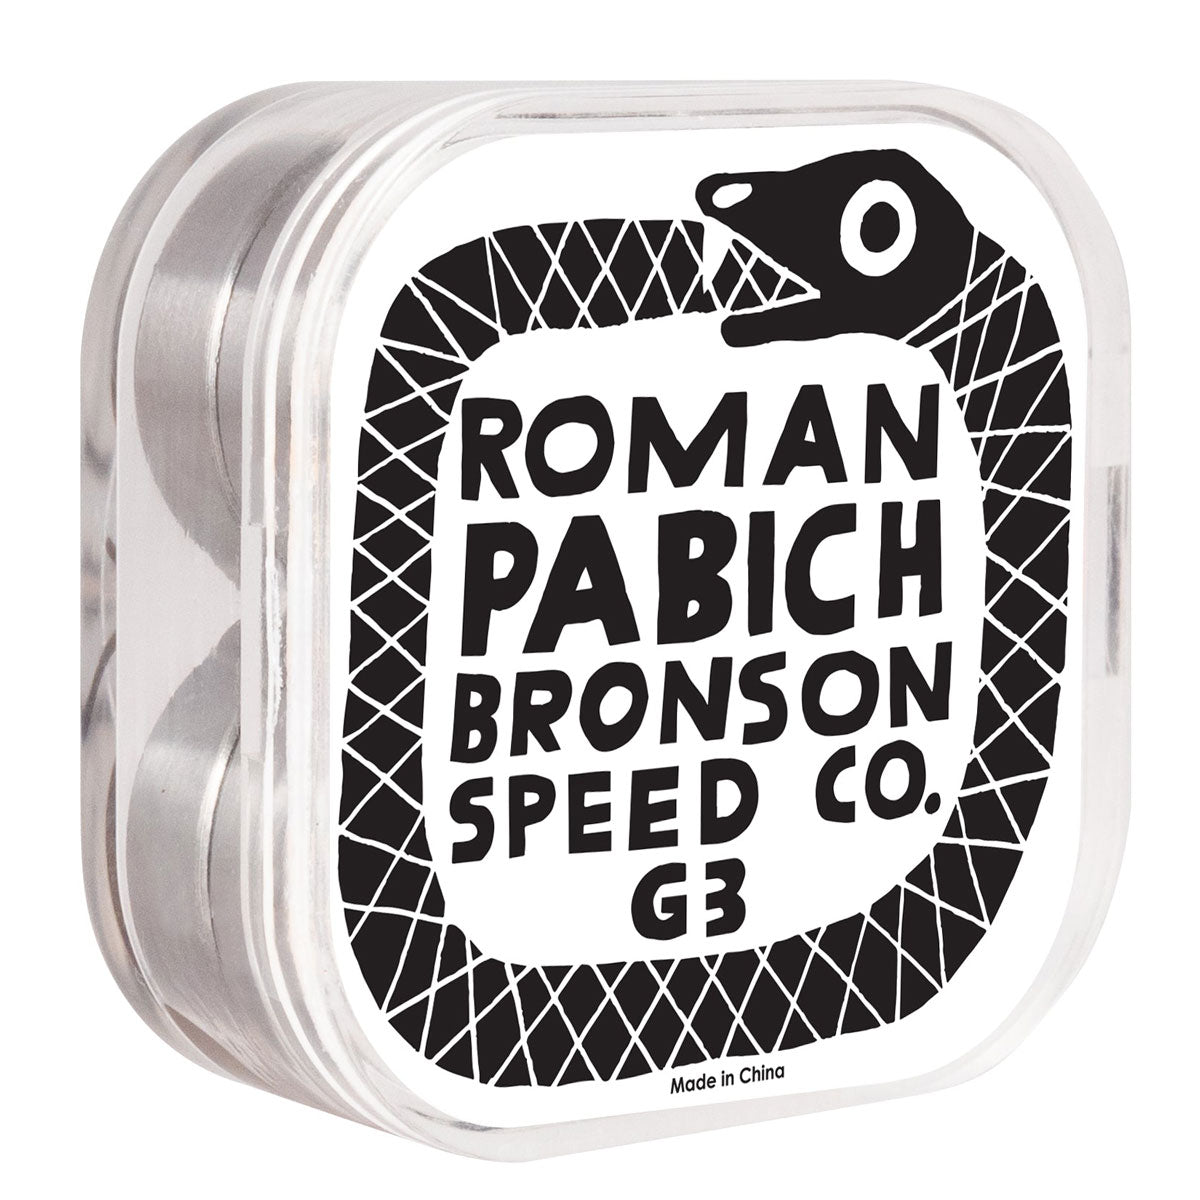 Bronson Roman Pabich Pro G3 Bearings - White image 1